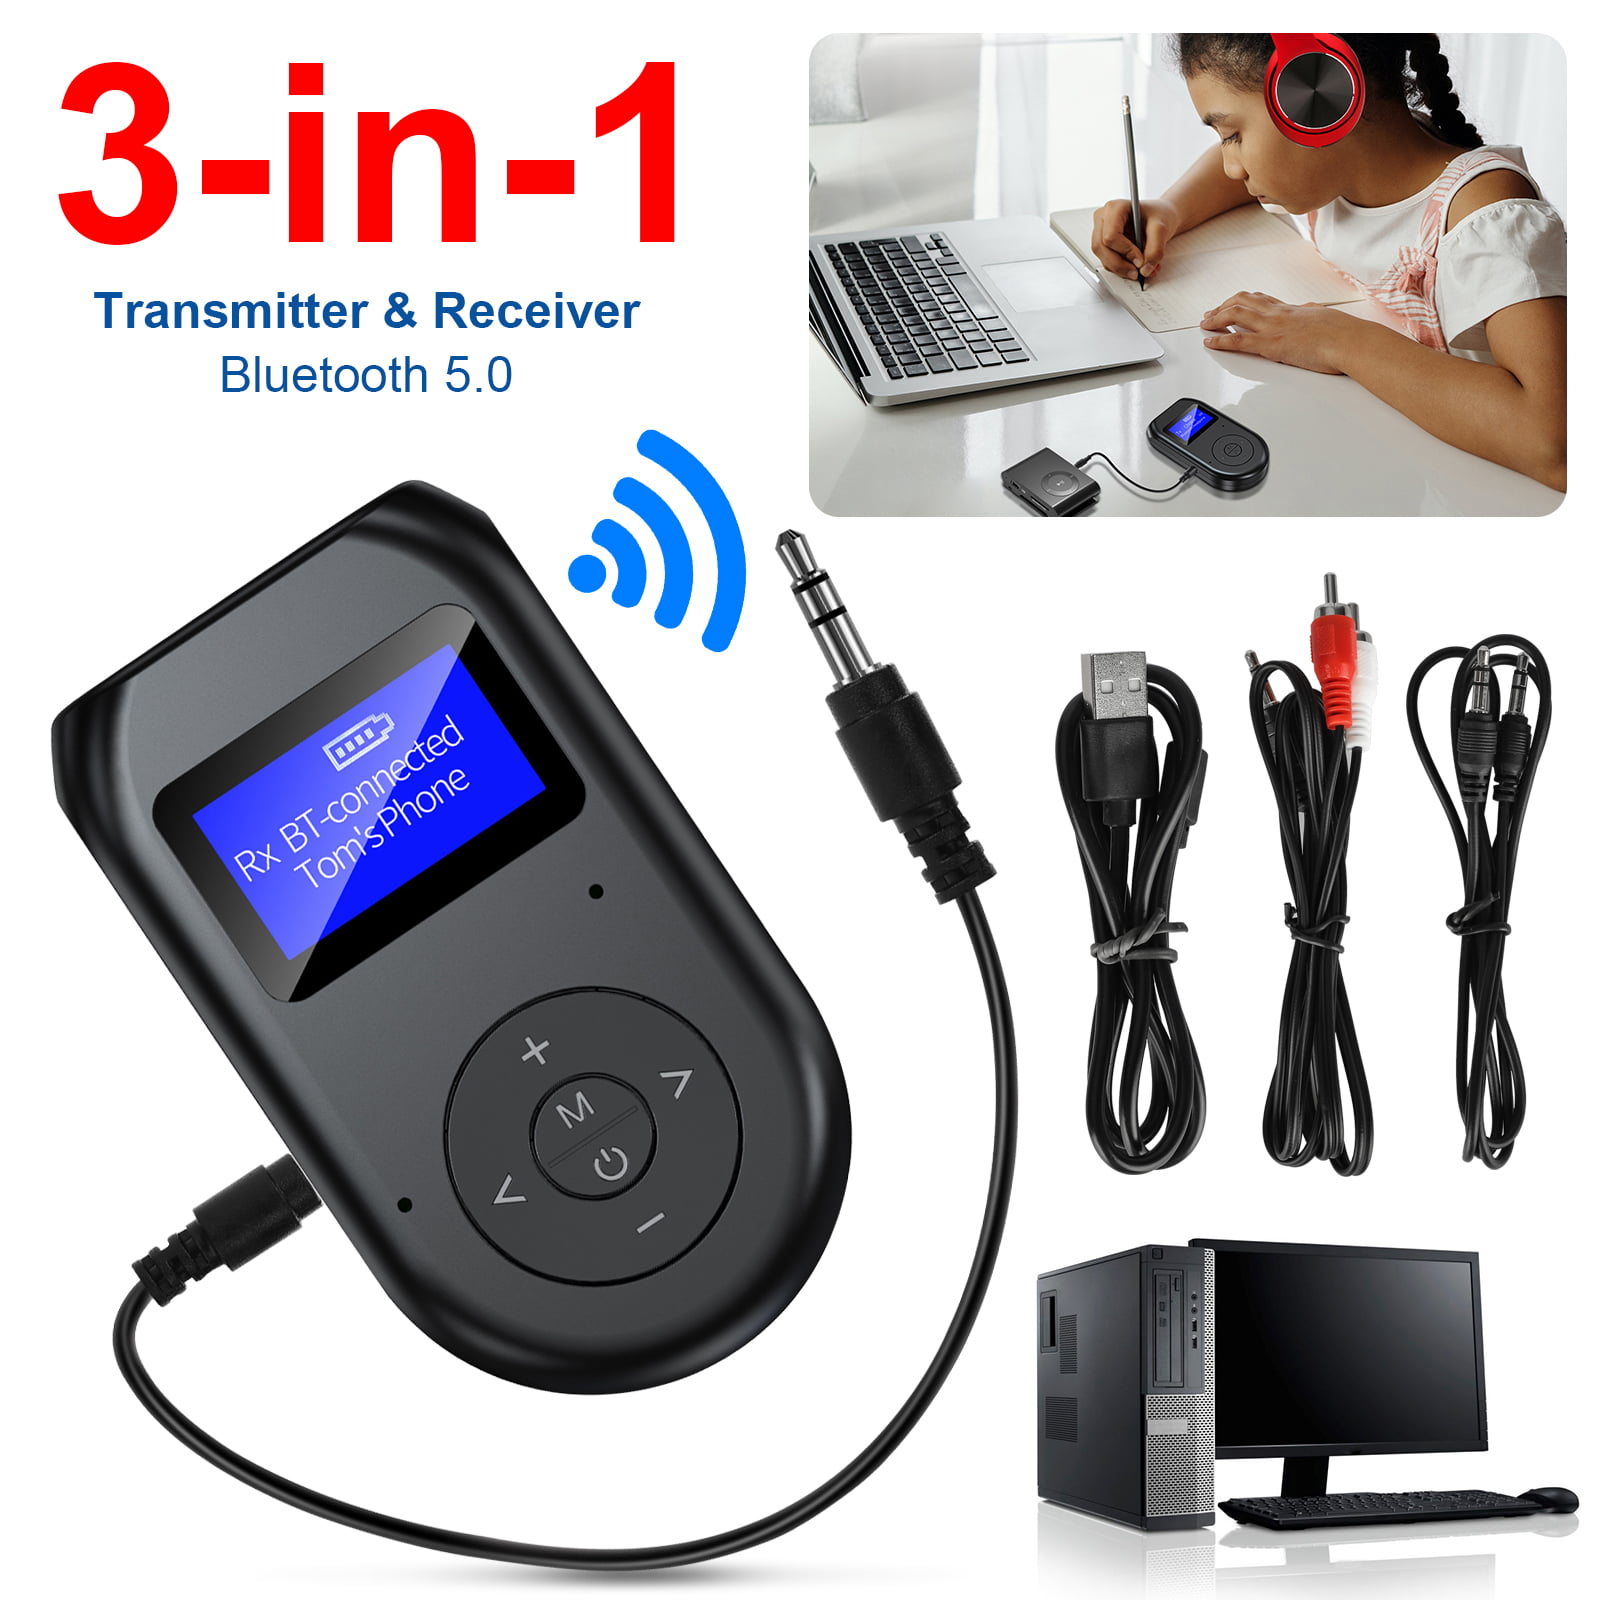 EEEkit Bluetooth Transmitter and Receiver, 3-in-1 Wireless Bluetooth 5